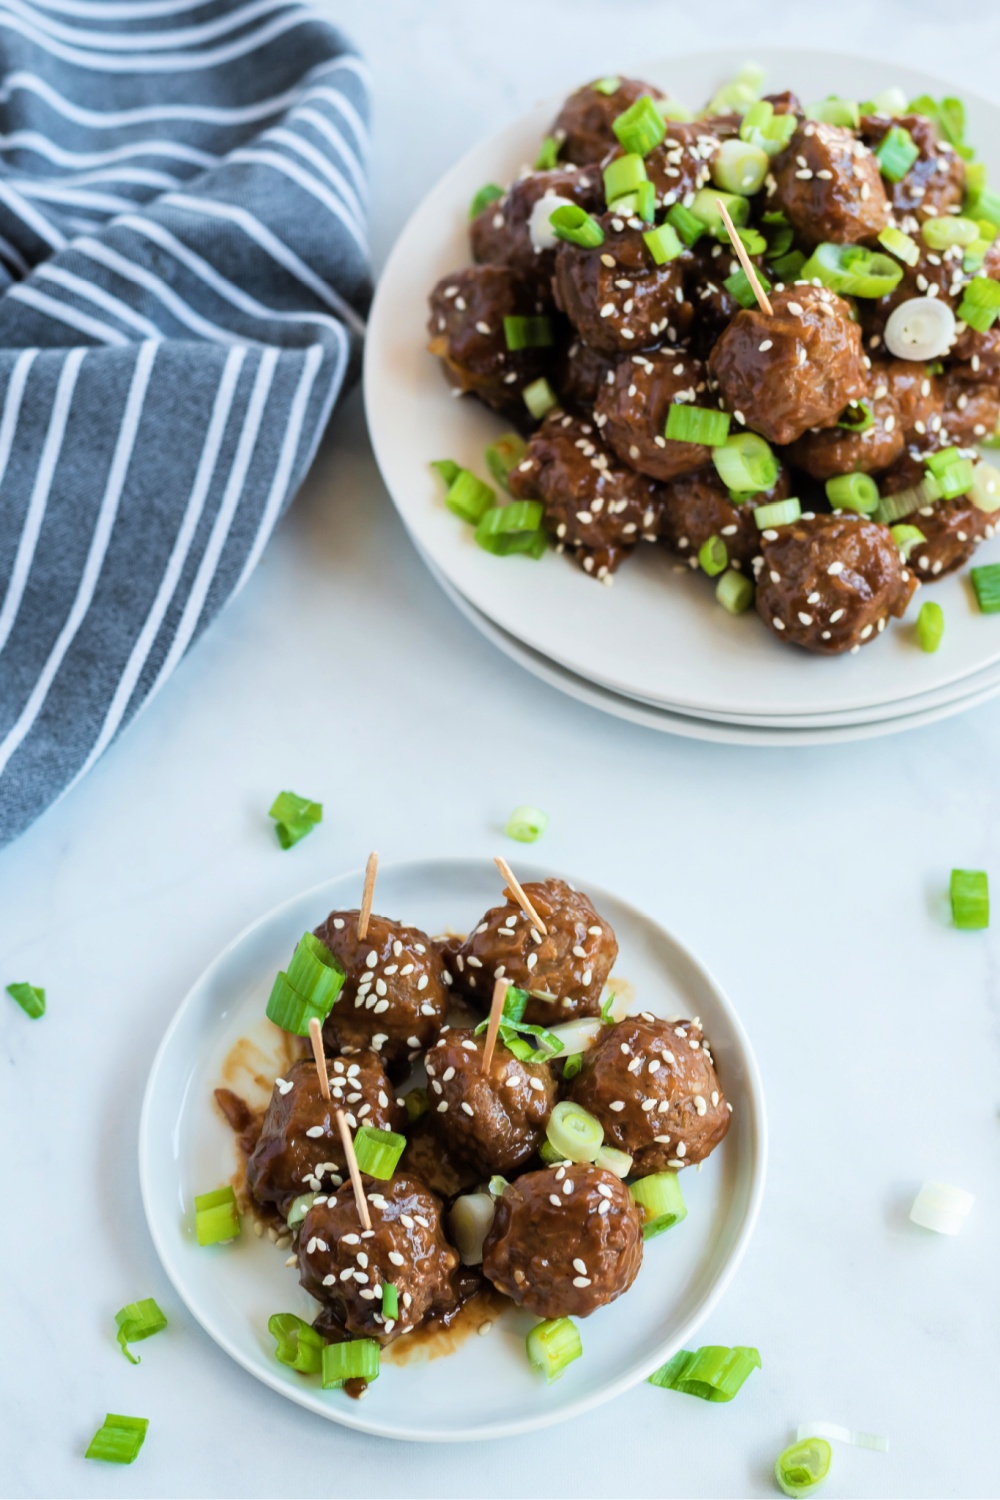 Crockpot Teriyaki Meatballs Recipe from Family Fresh Meals via @familyfresh